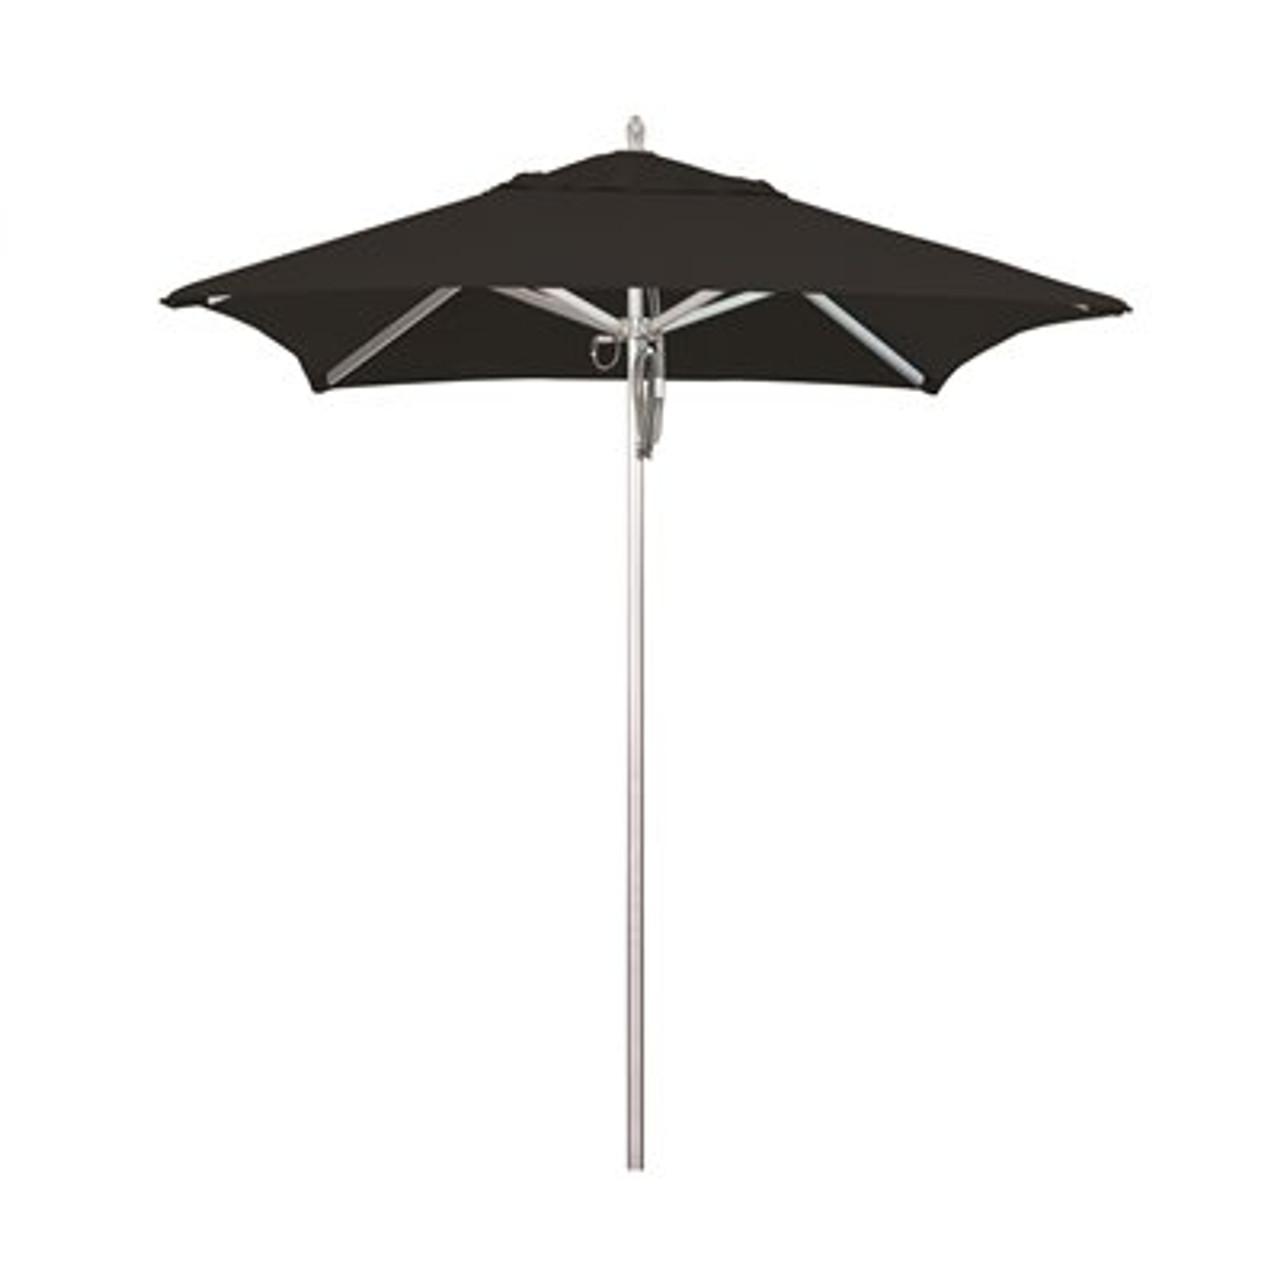 California Umbrella 6 ft. Silver Aluminum Commercial Market Patio Umbrella with Pulley Lift in Black Sunbrella